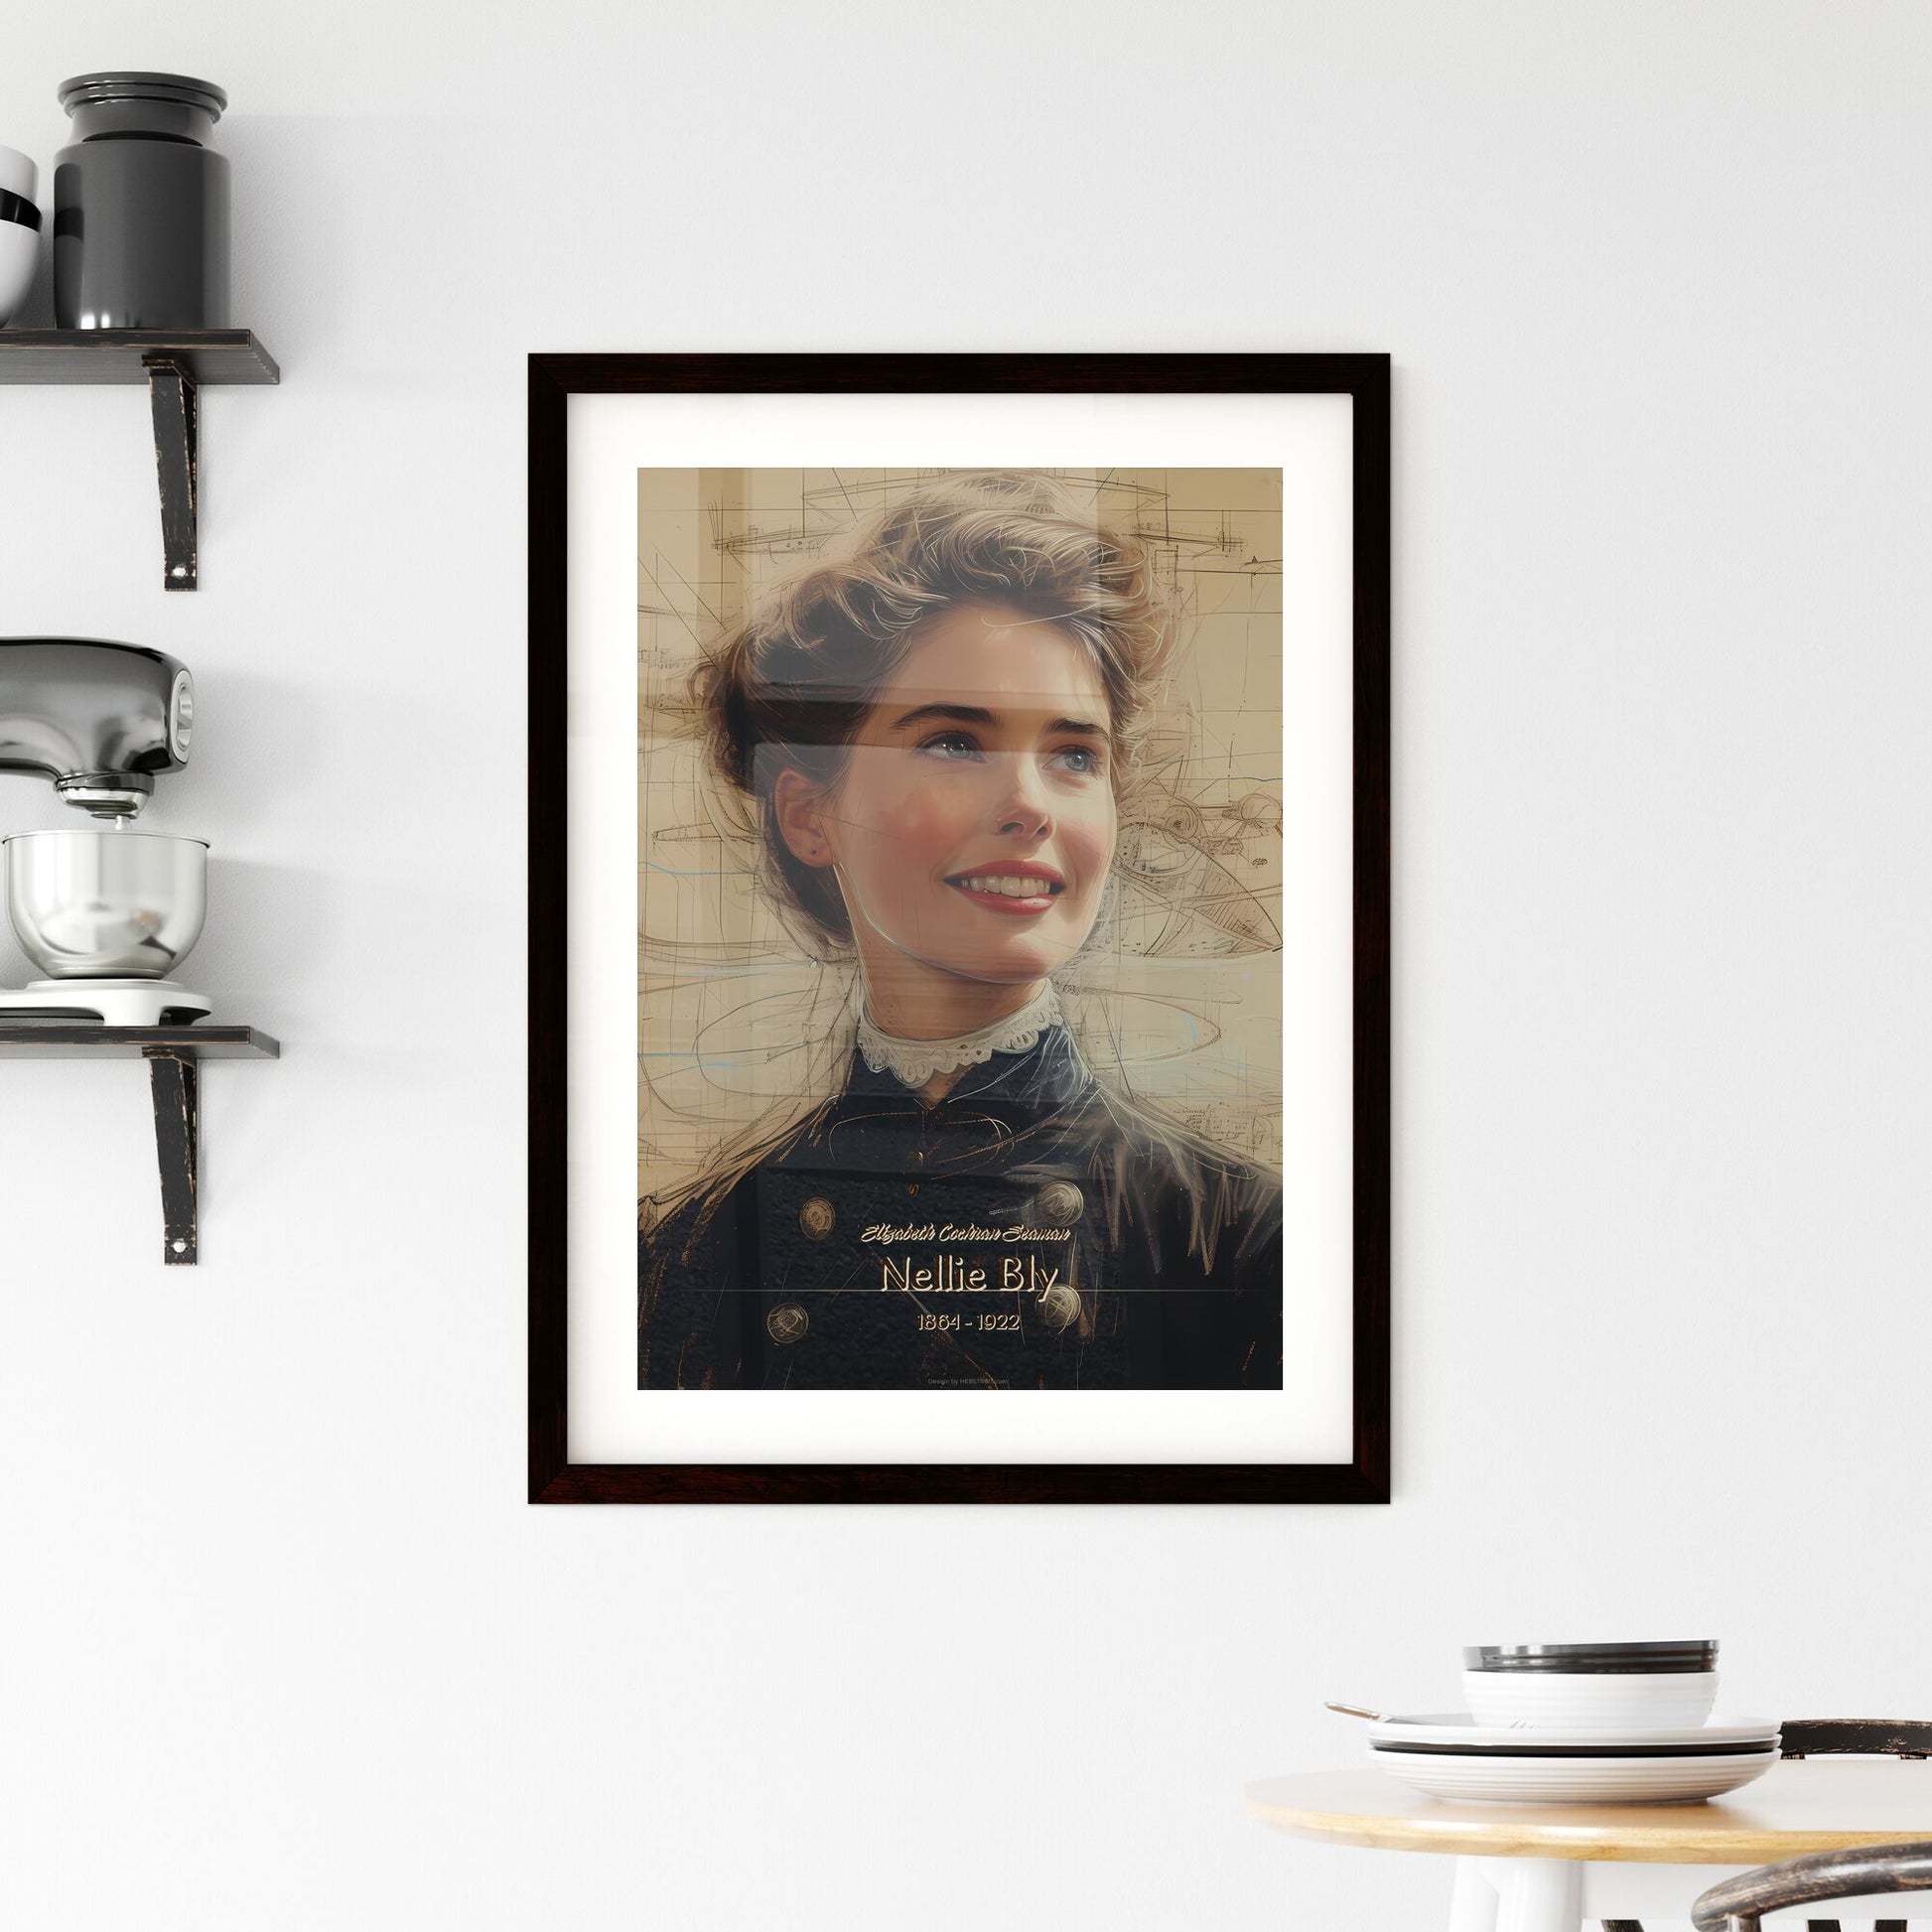 Elizabeth Cochran Seaman, Nellie Bly, 1864 - 1922, A Poster of a woman in a black jacket Default Title